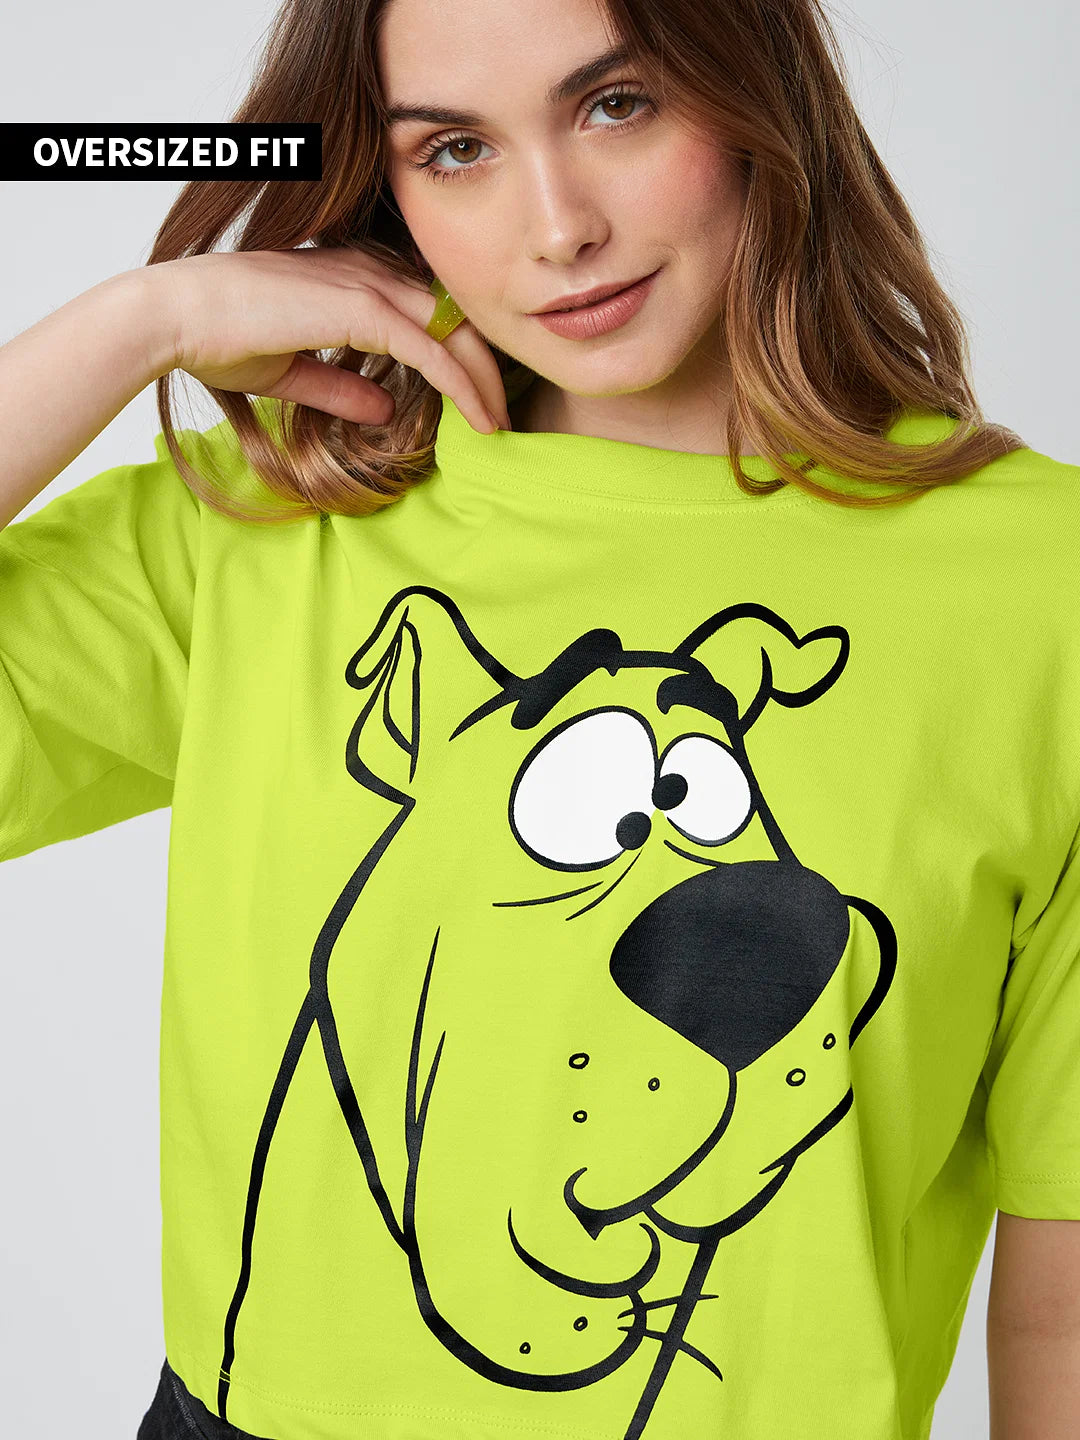 Scooby Doo Huh (UK version)